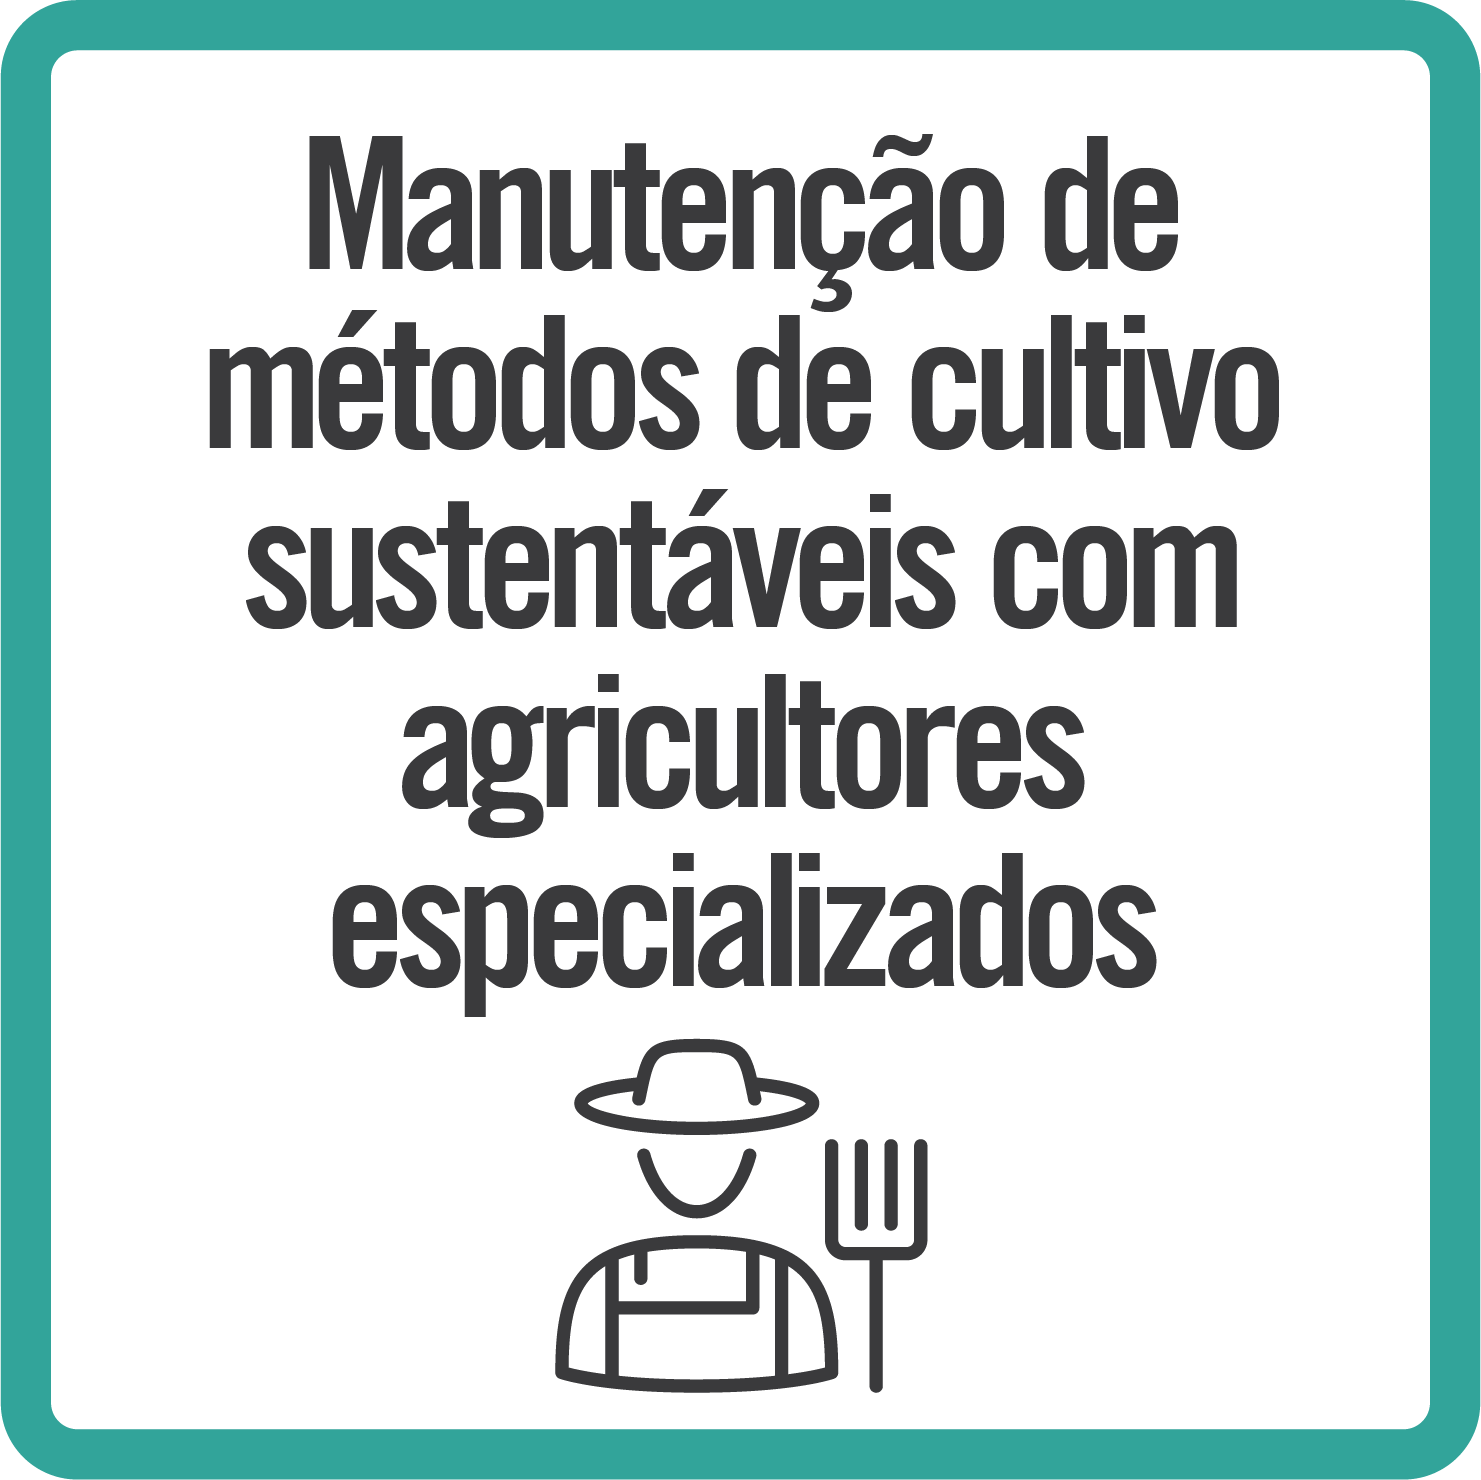 Sustainability farmers_BORDER_PORT